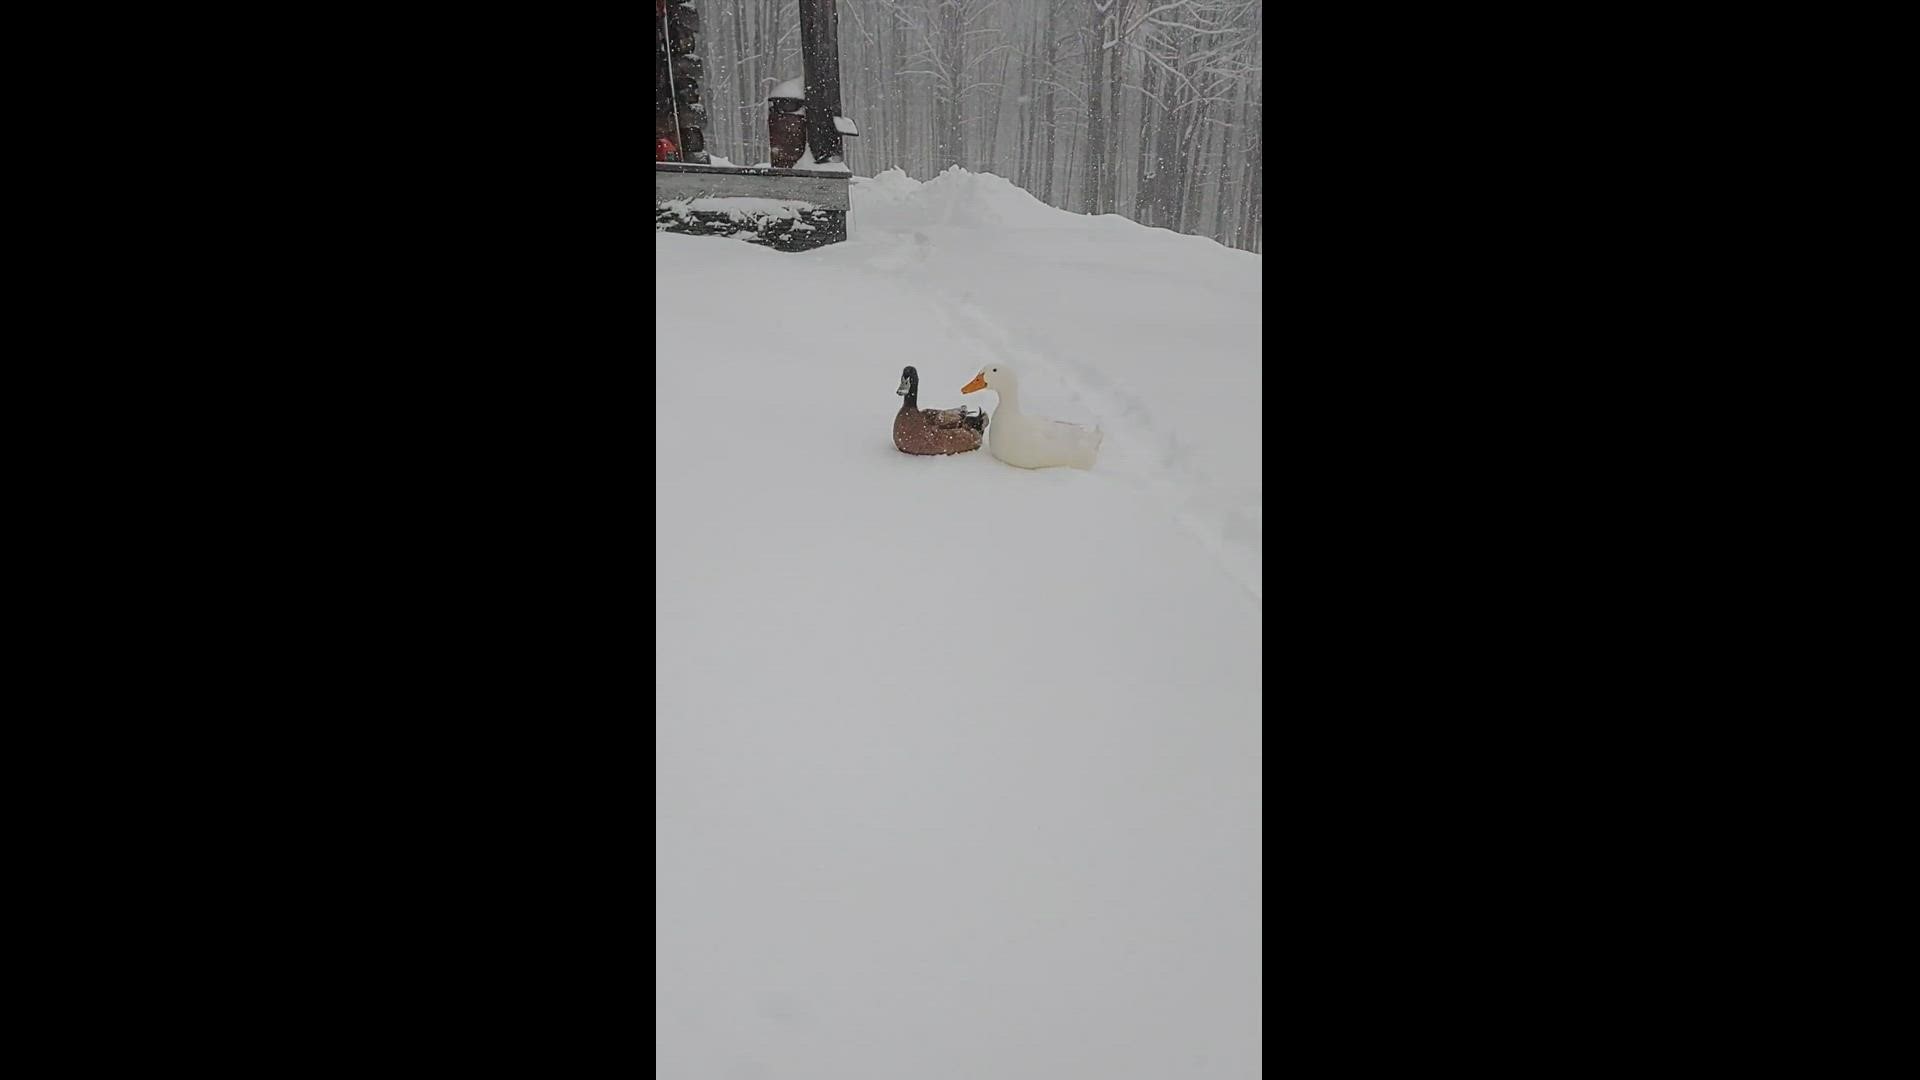 My ducks enjoyed today's snowstorm!
Credit: Heidi Varle